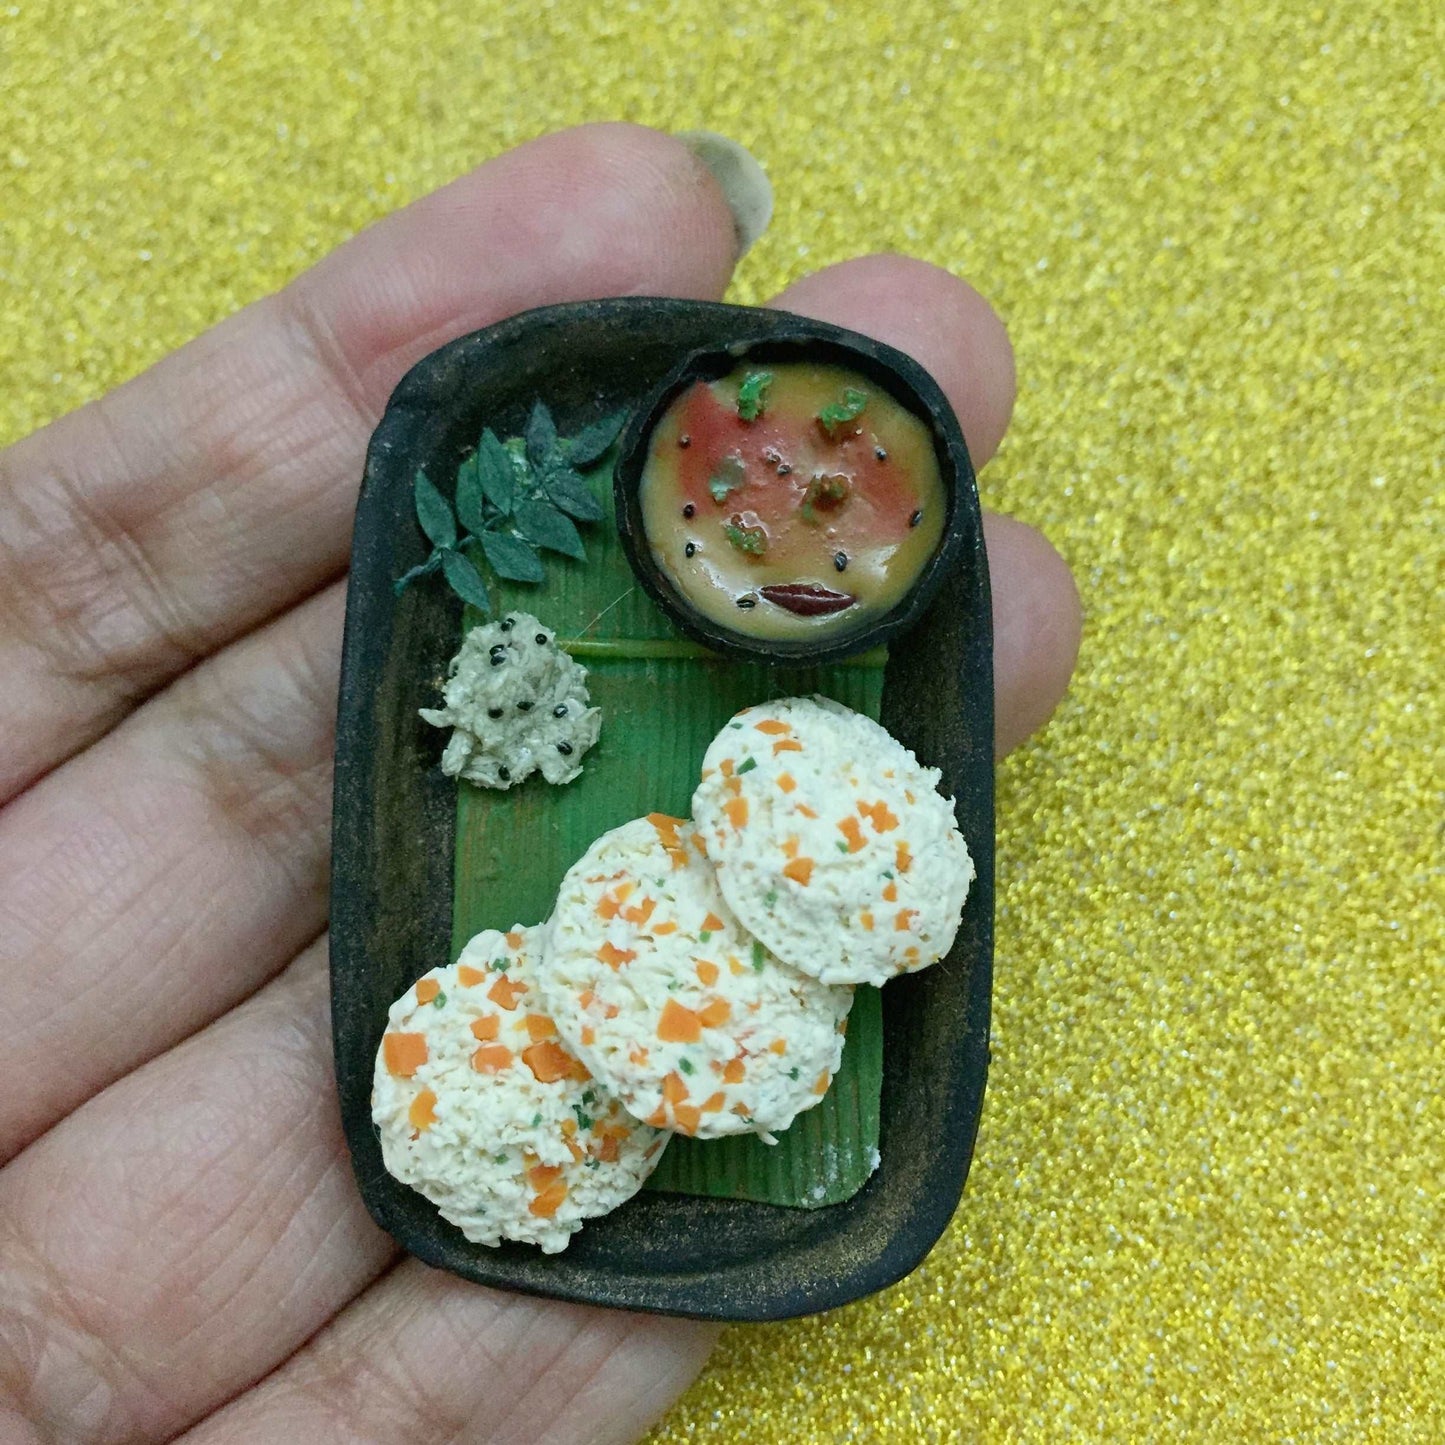 Masala Idli South Indian Miniature Food Magnet